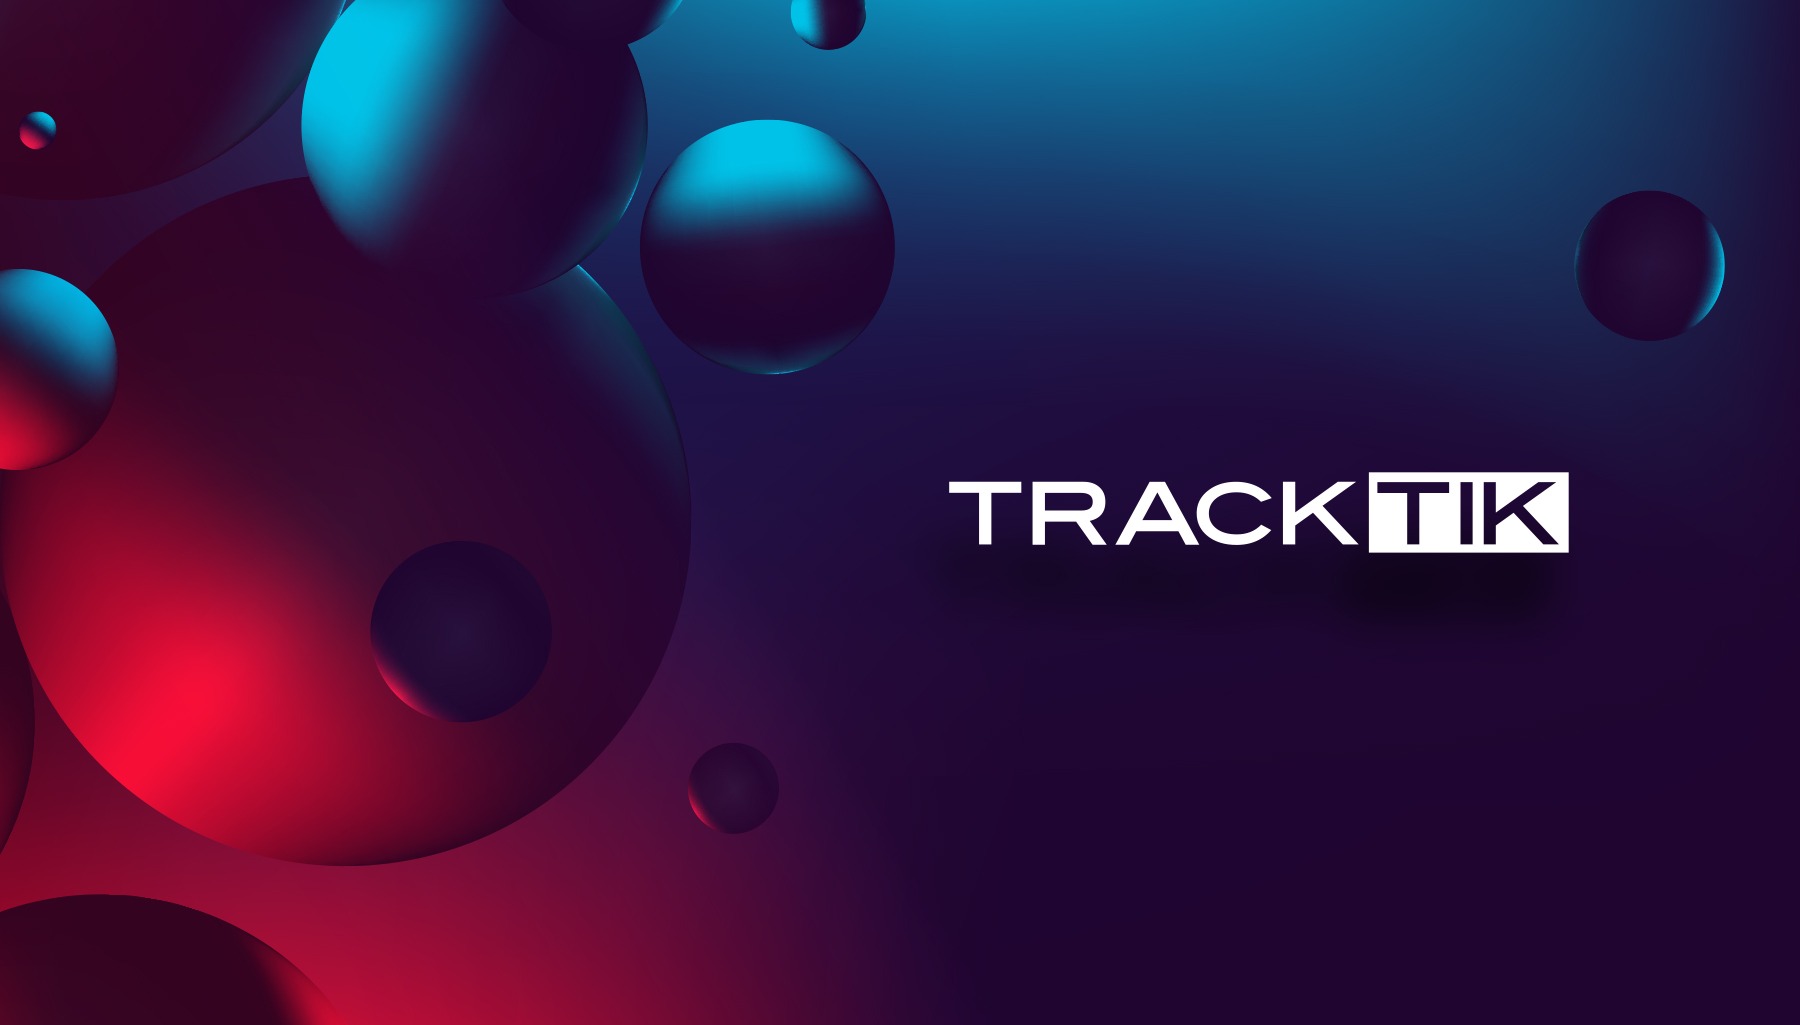 TrackTik receives $45M in funding